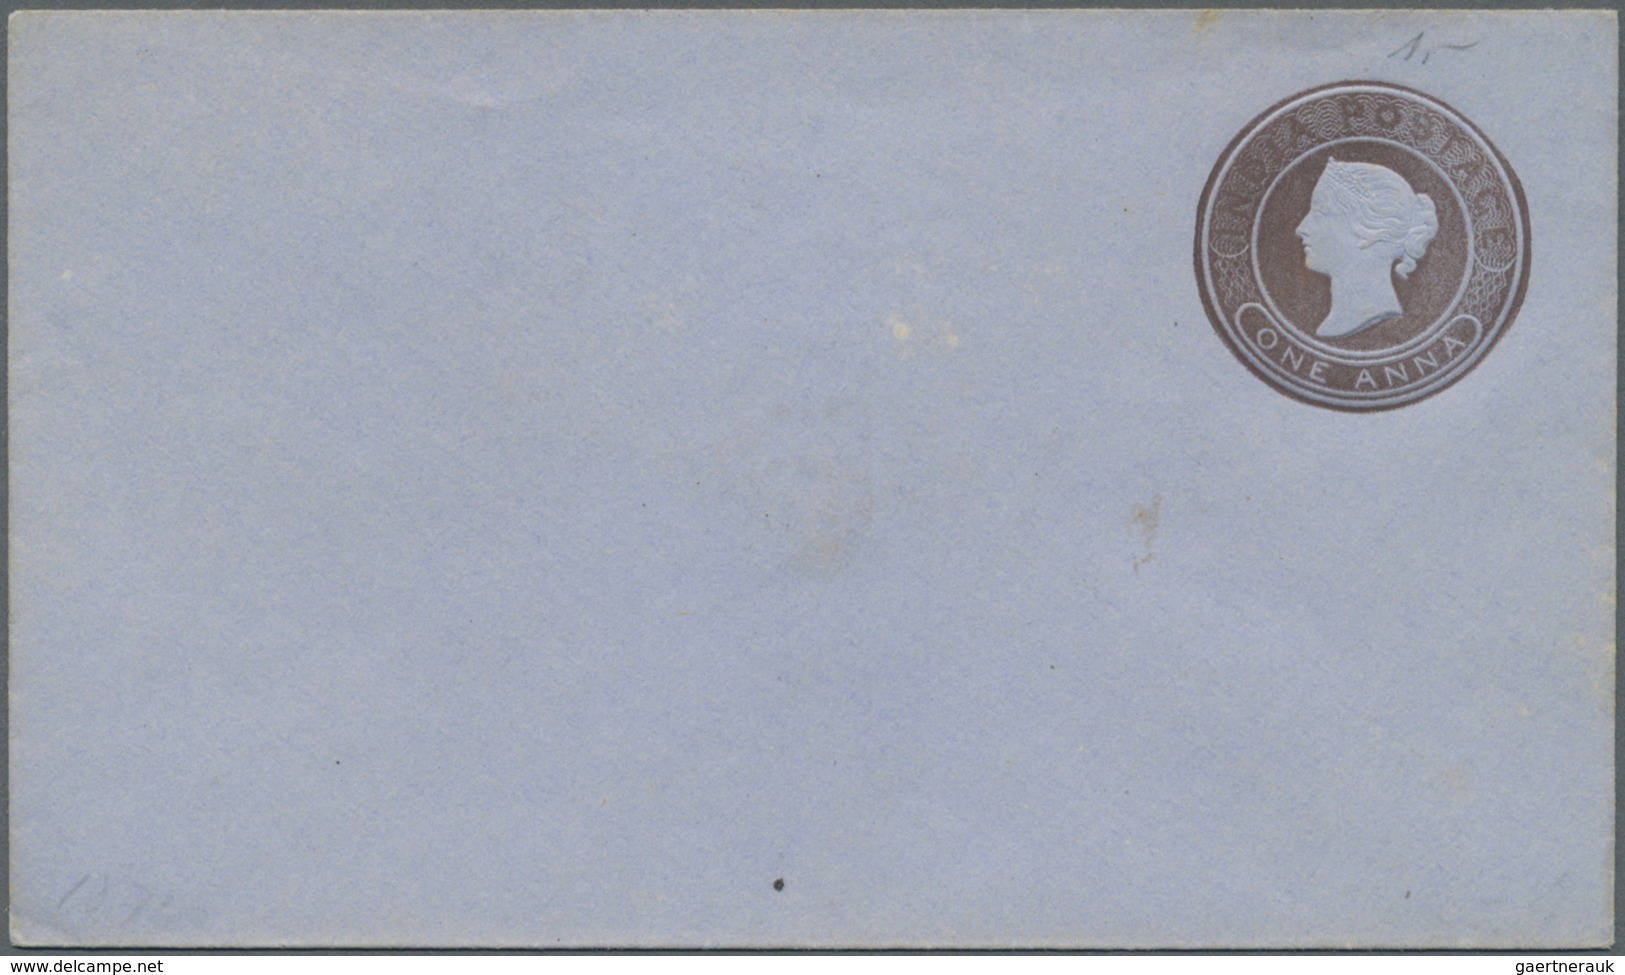 GA/Br Indien - Ganzsachen: 1850's-1970's ca.: Collection of Indian postal stationery envelopes, letter she